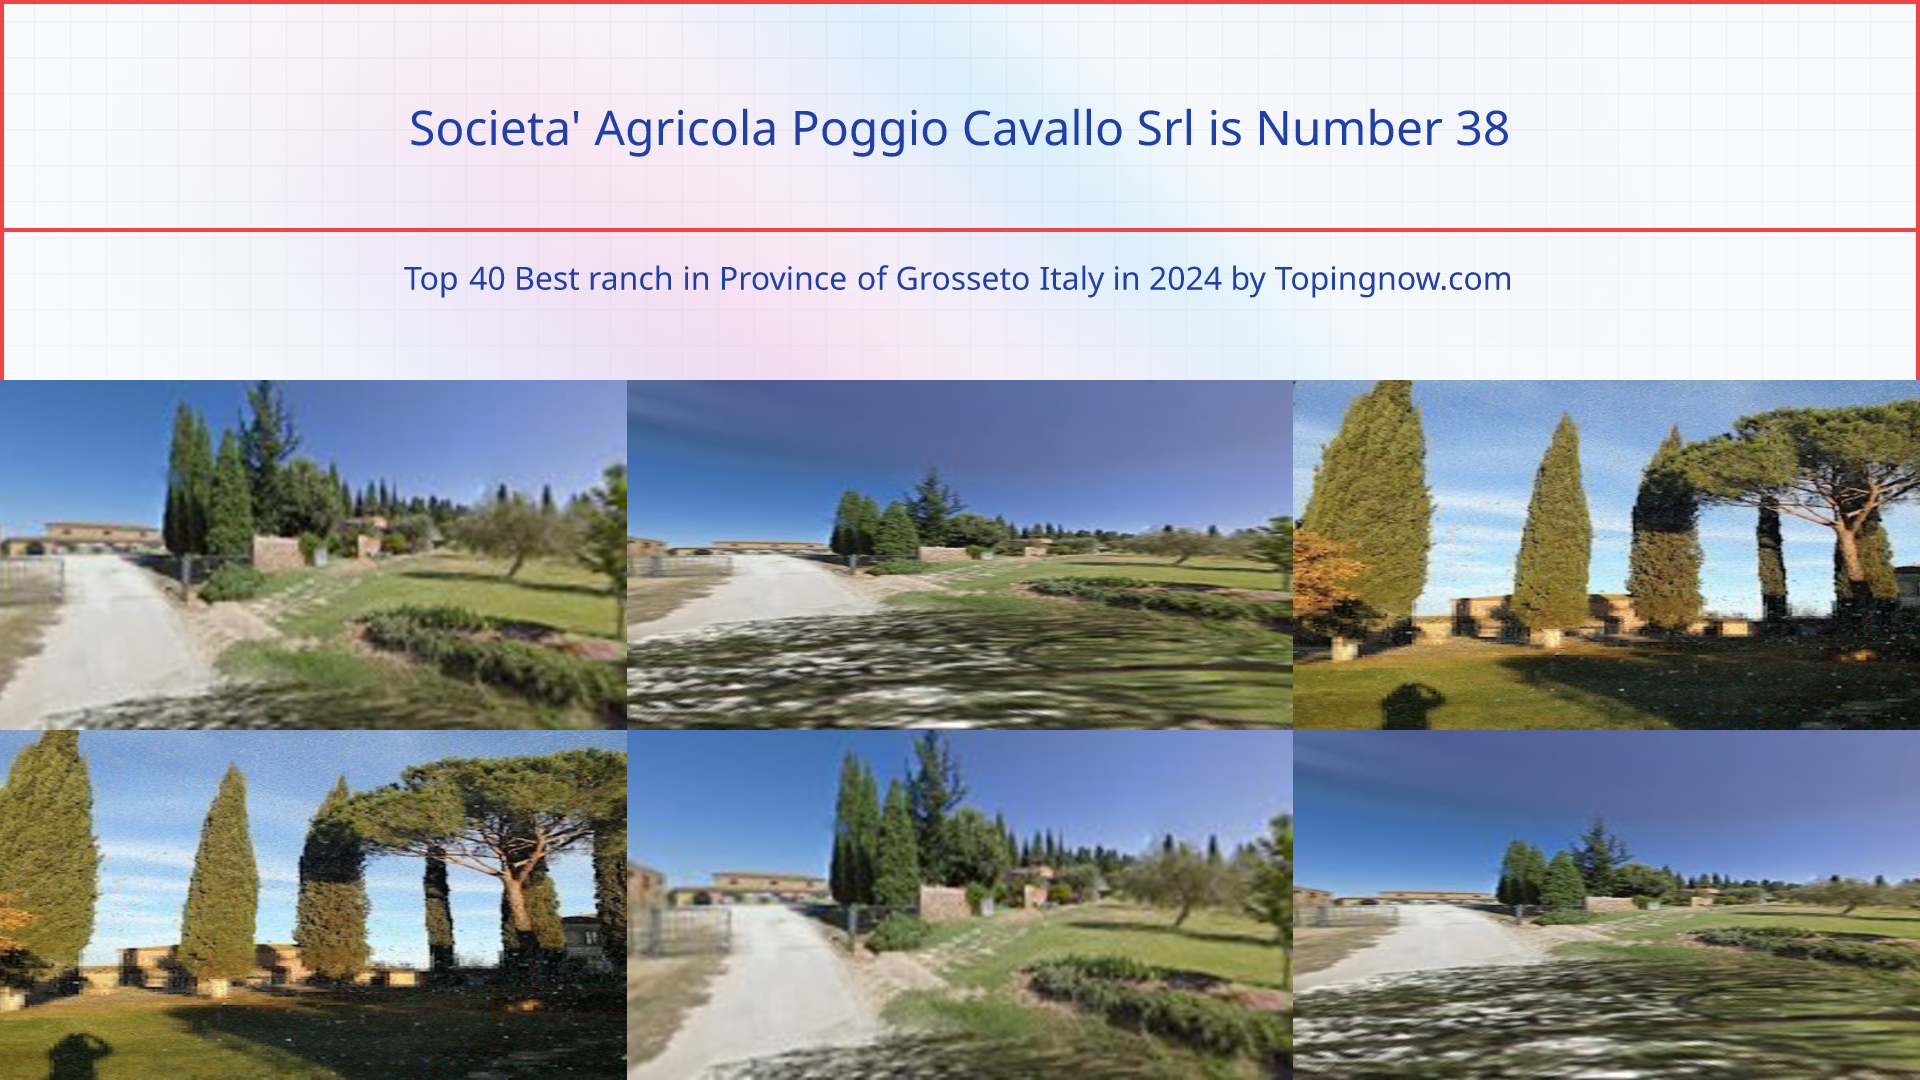 Societa' Agricola Poggio Cavallo Srl: Top 40 Best ranch in Province of Grosseto Italy in 2024